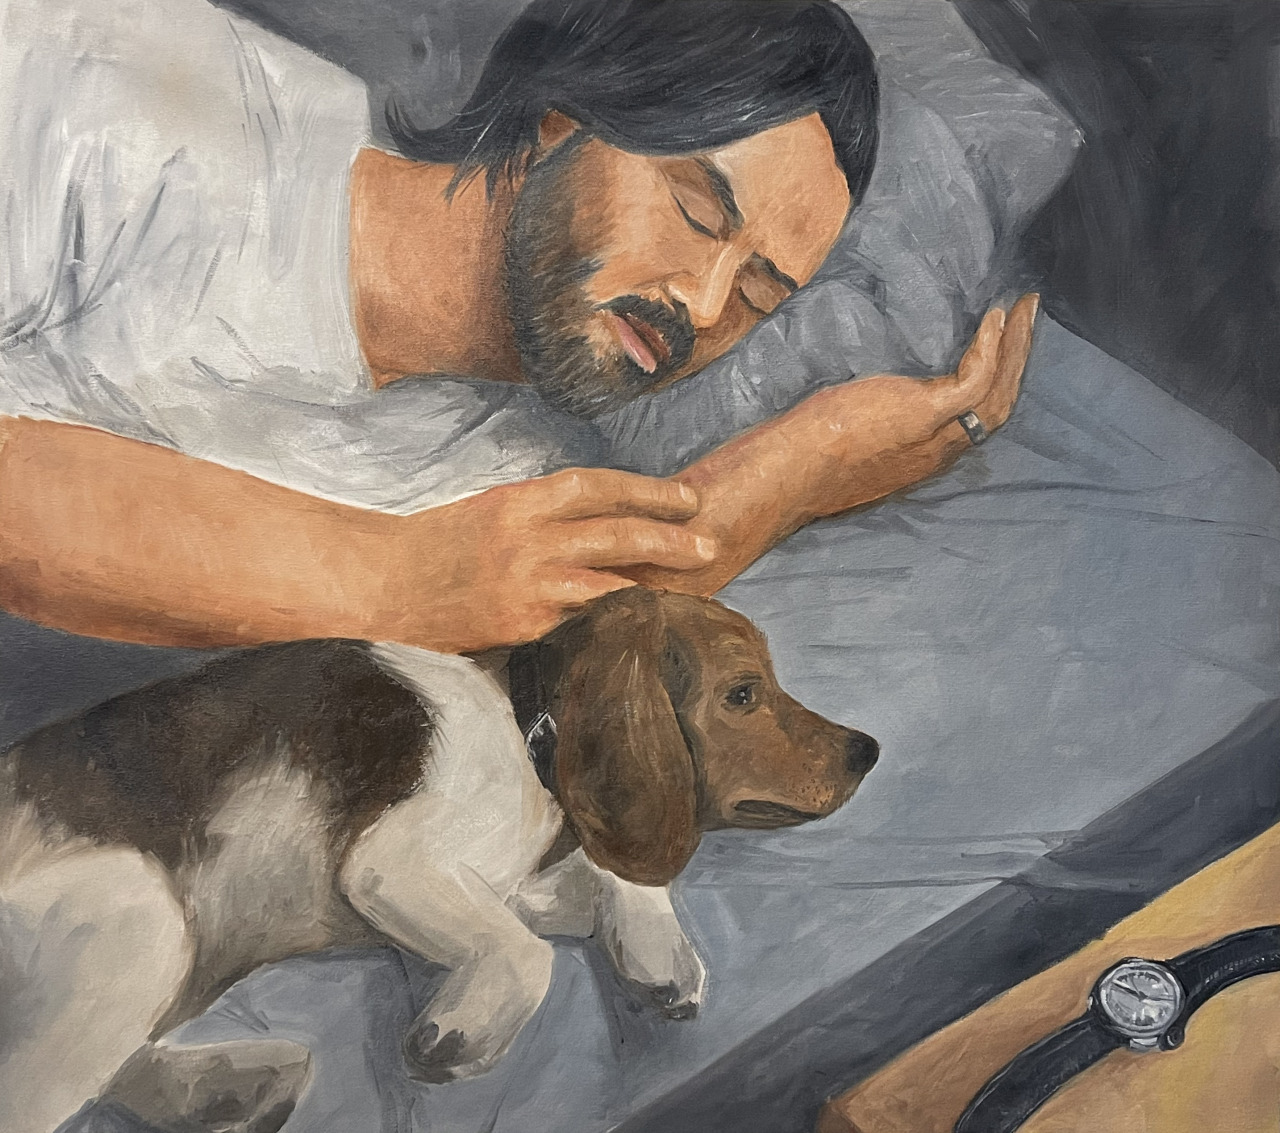 John & Daisy In Bed. 2022. Oil on canvas.